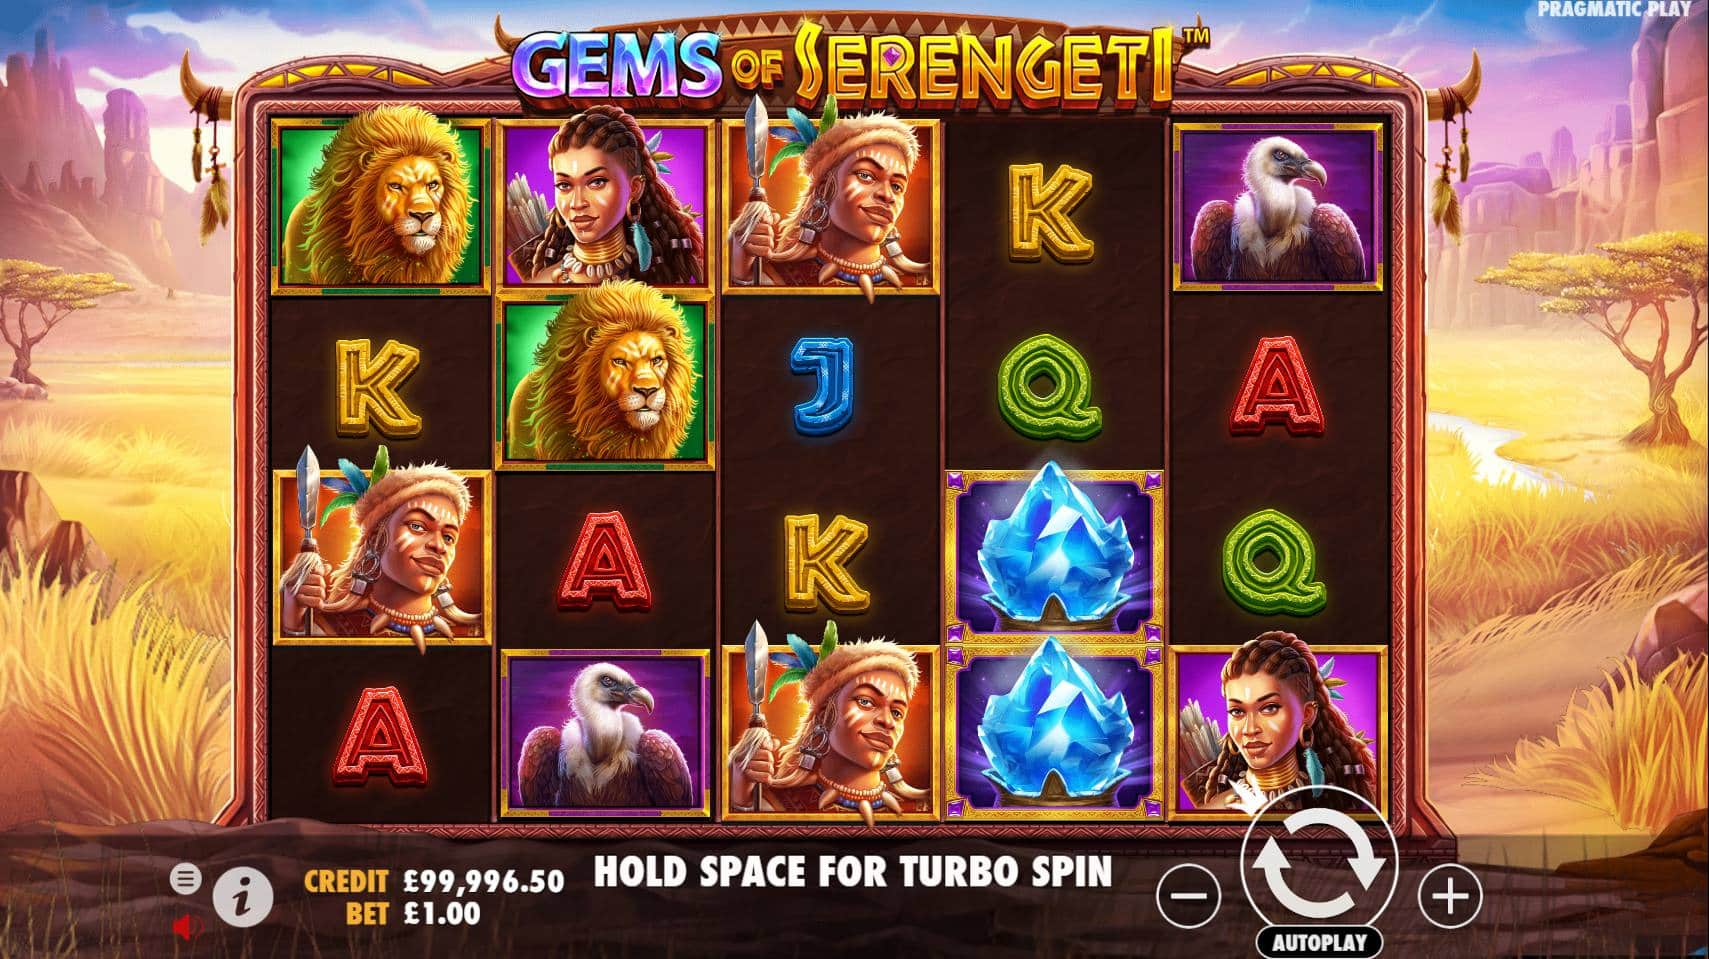 Gems of Serengeti pragmatic play slot online demo